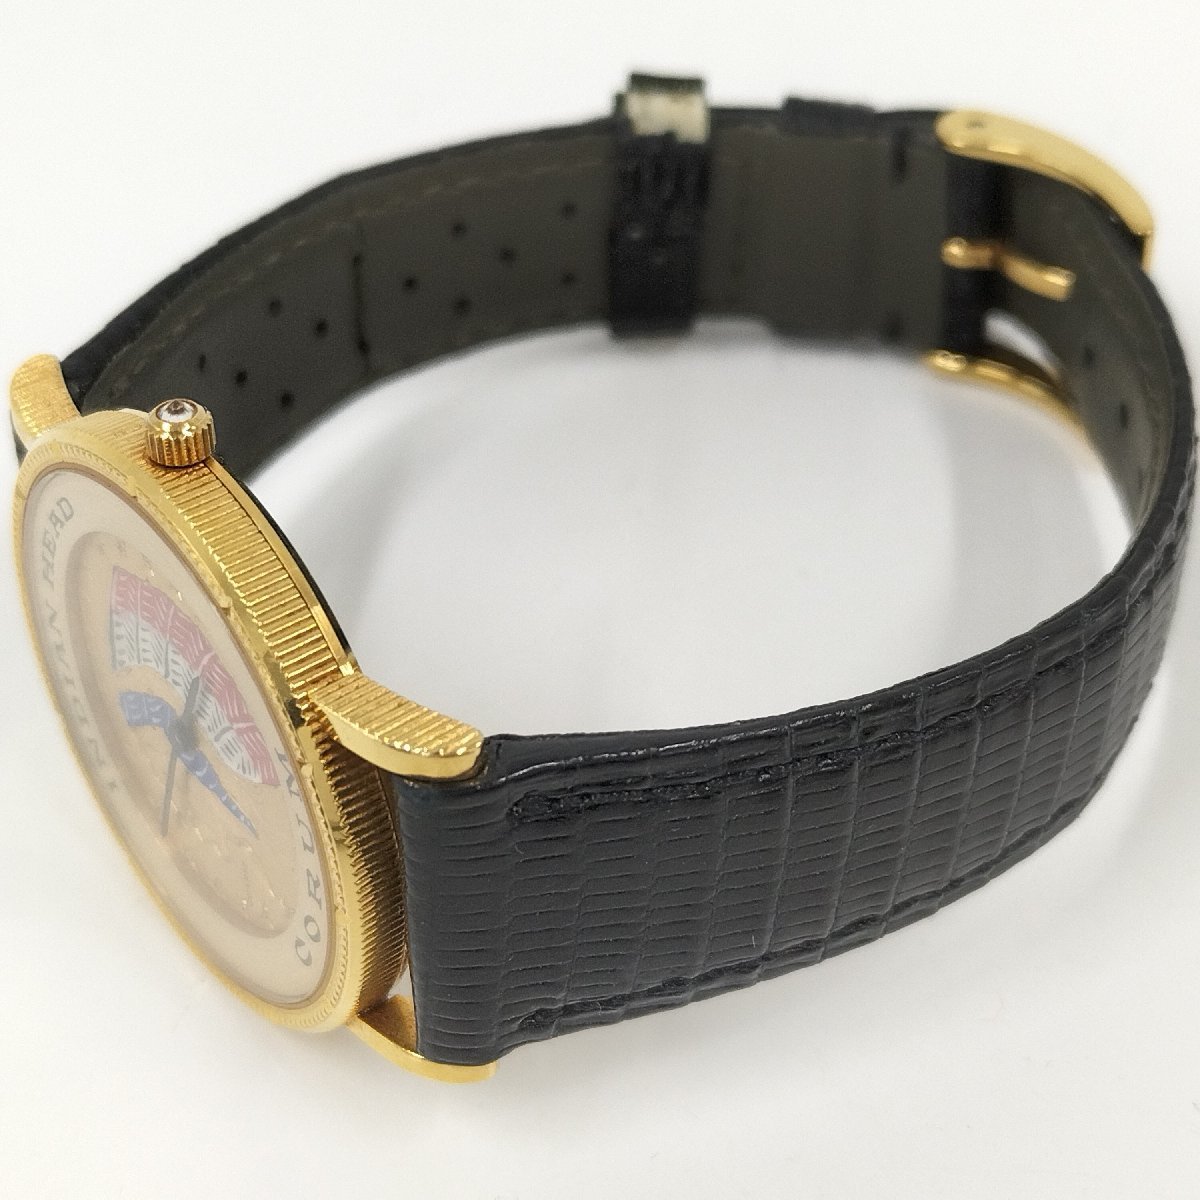 ●CORUM コルム インディアンヘッド コインウォッチ K18 ダイヤ 腕時計 ゴールド文字盤 クォーツ 中古[ne]u559_画像3